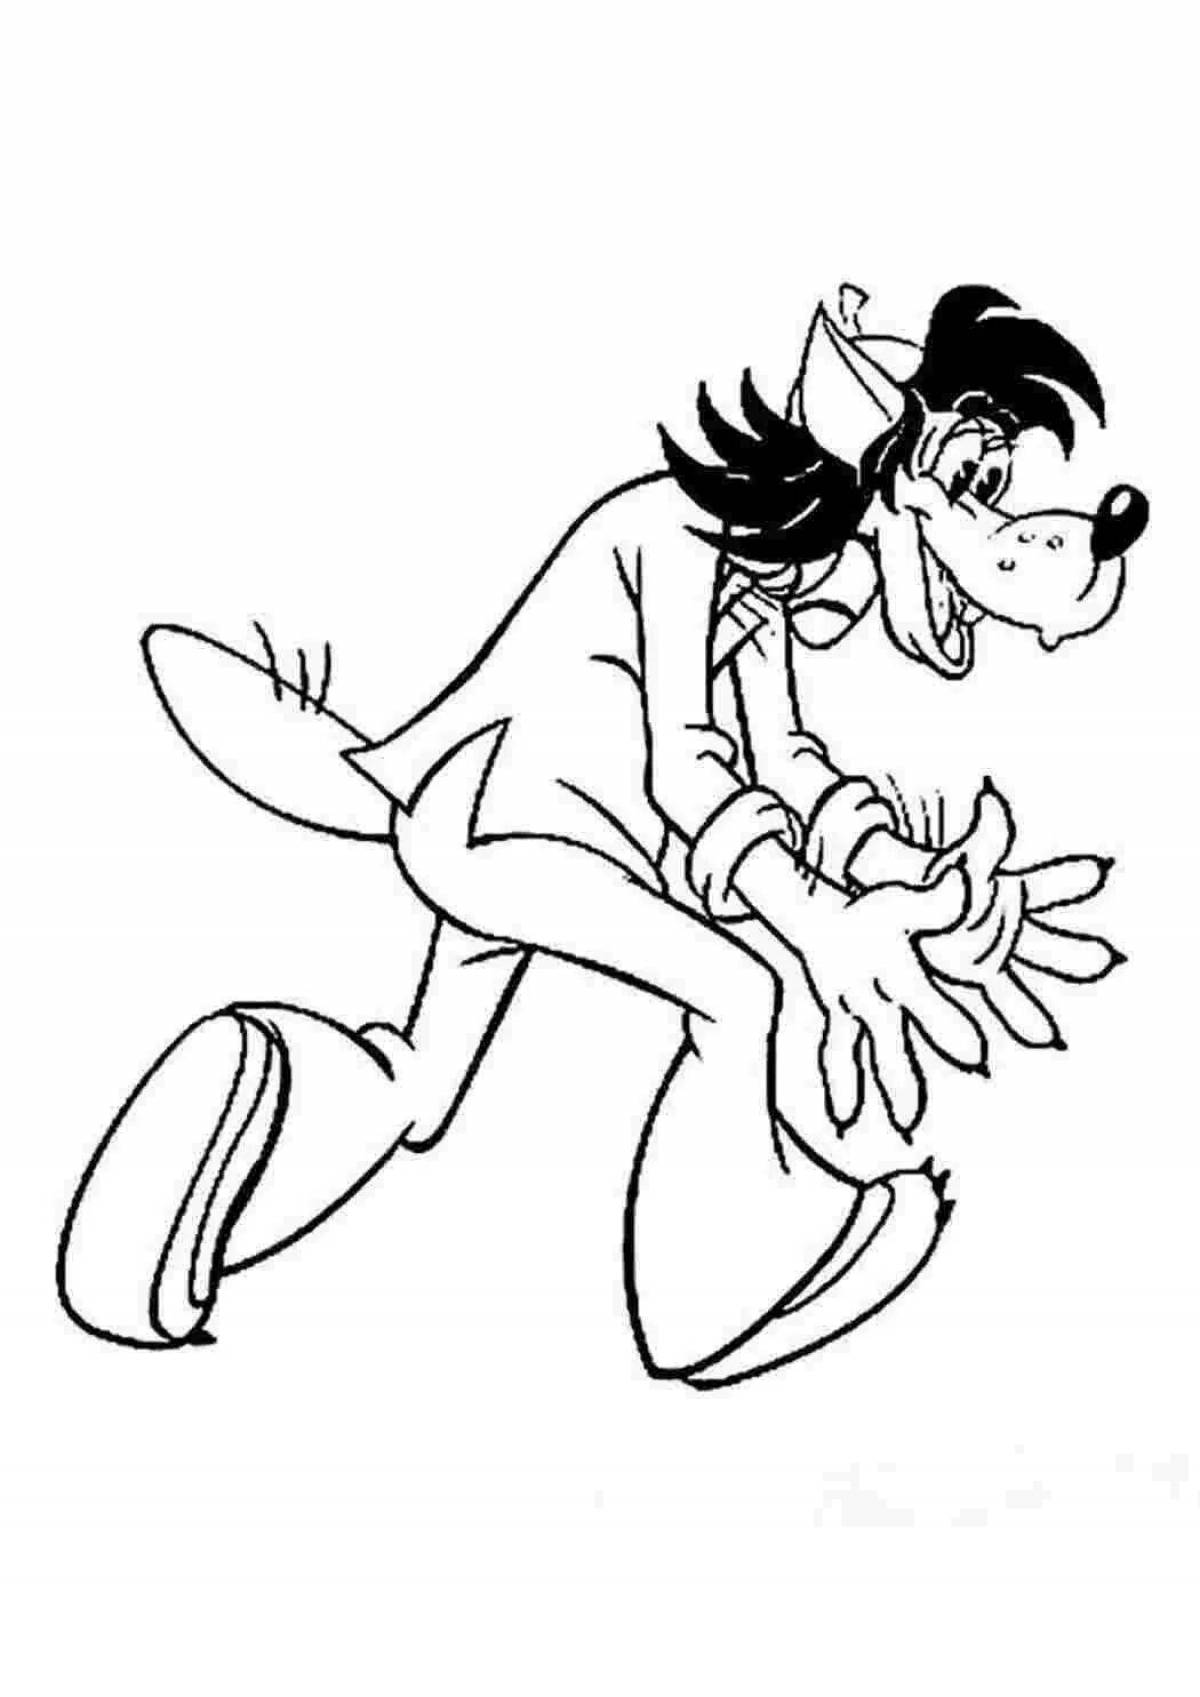 Rampant cartoon wolf coloring page